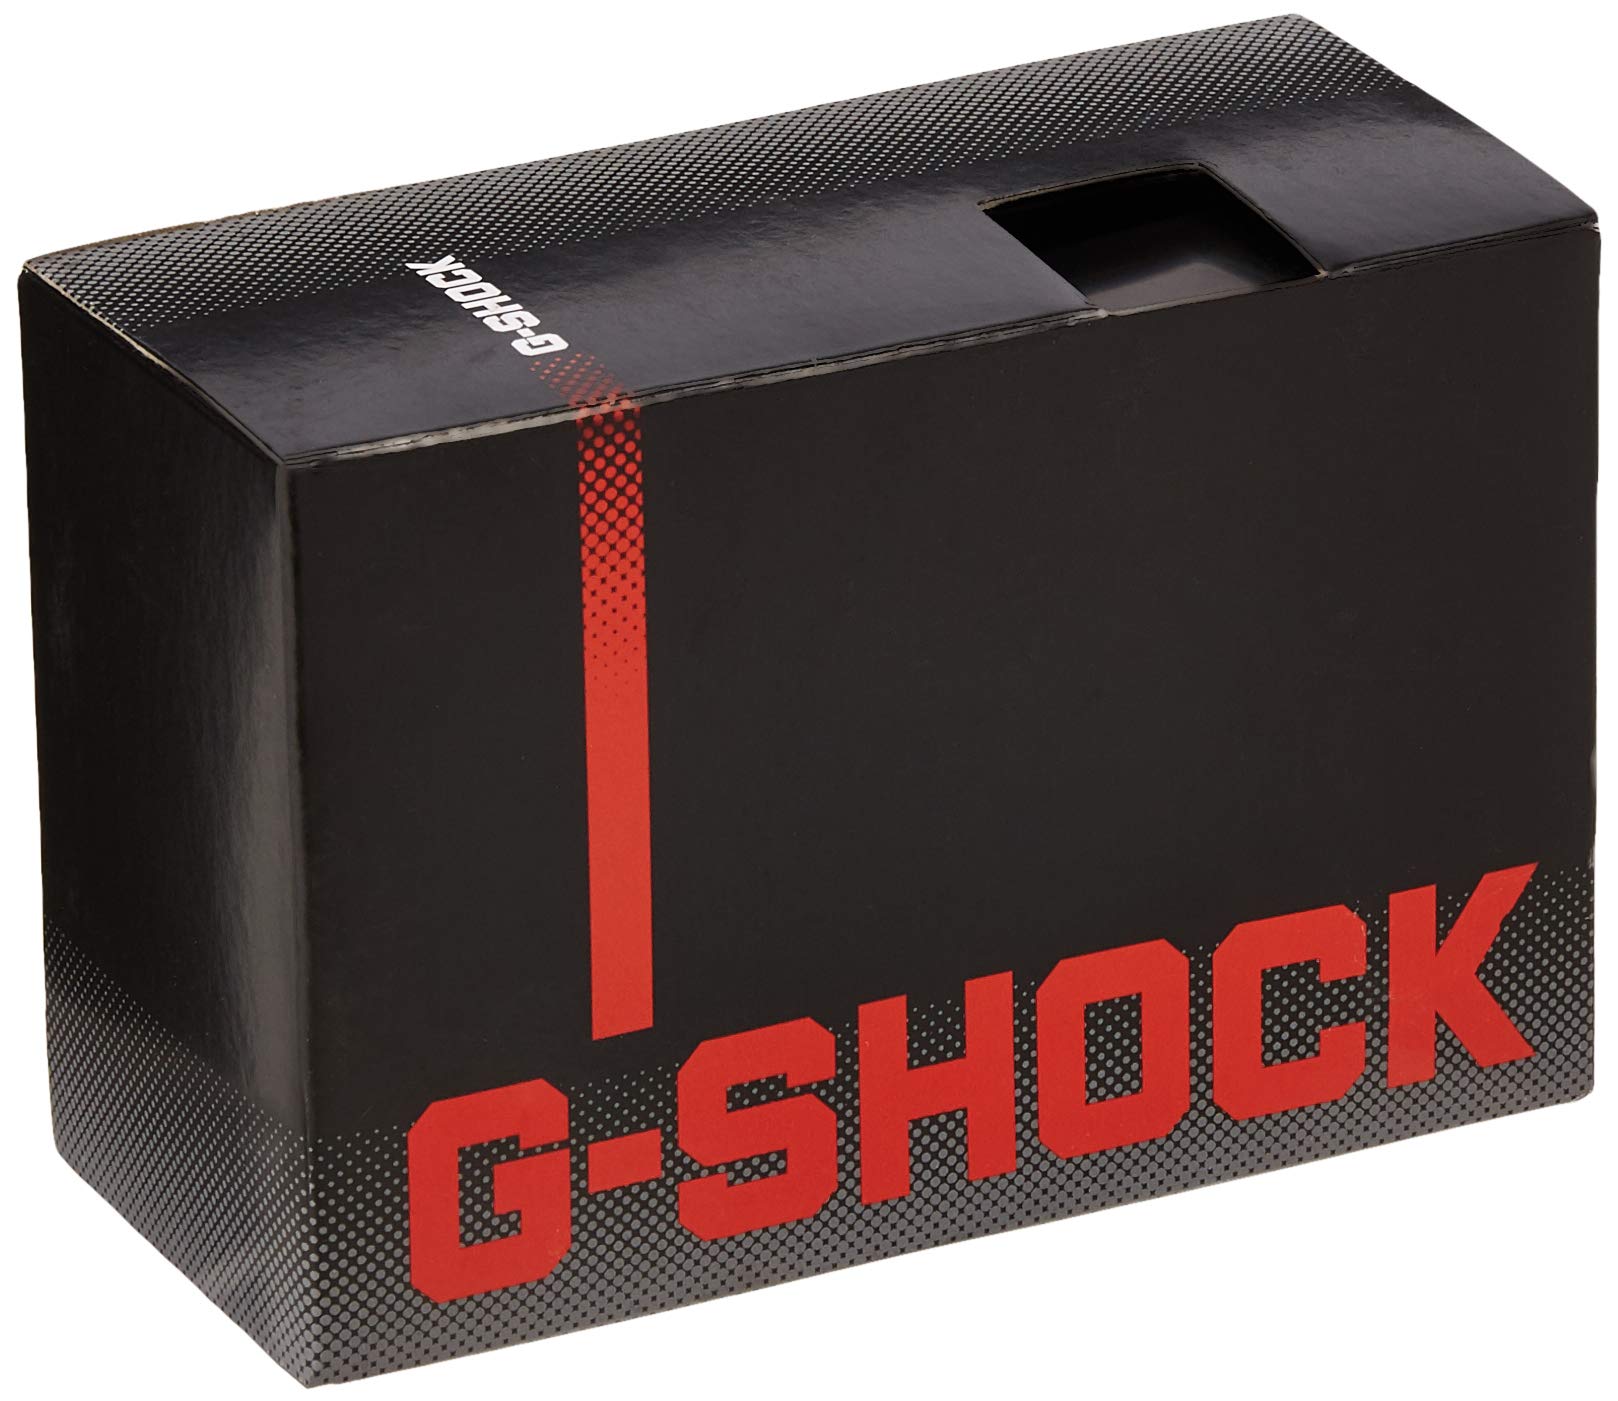 Casio DW9052-1V G Shock - Digital -200M Wr- Red Accents